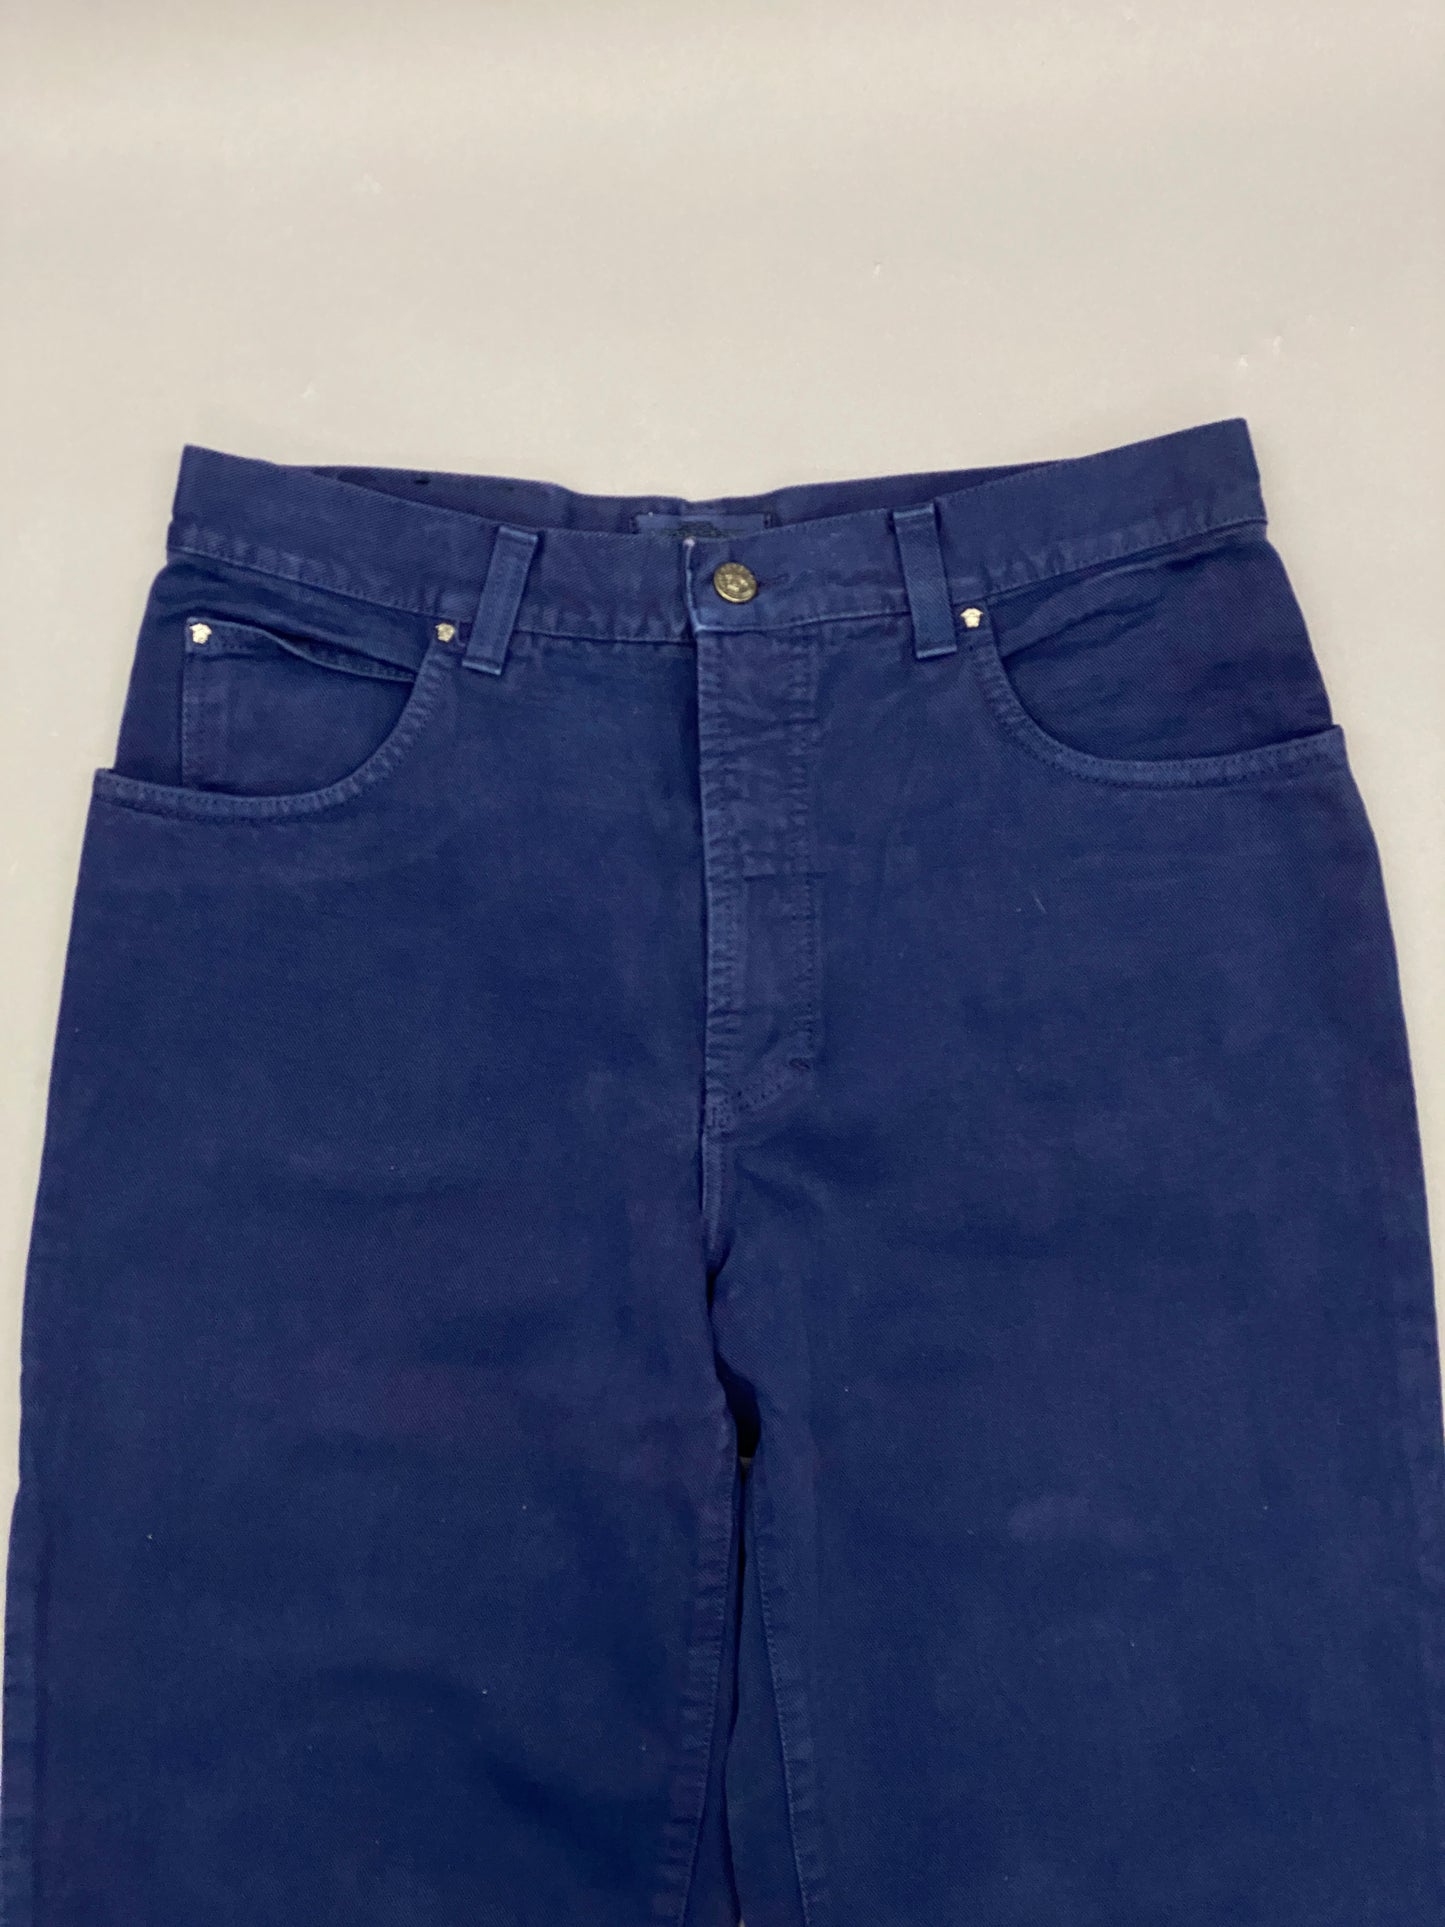 Jeans Versace Navy Vintage - 32